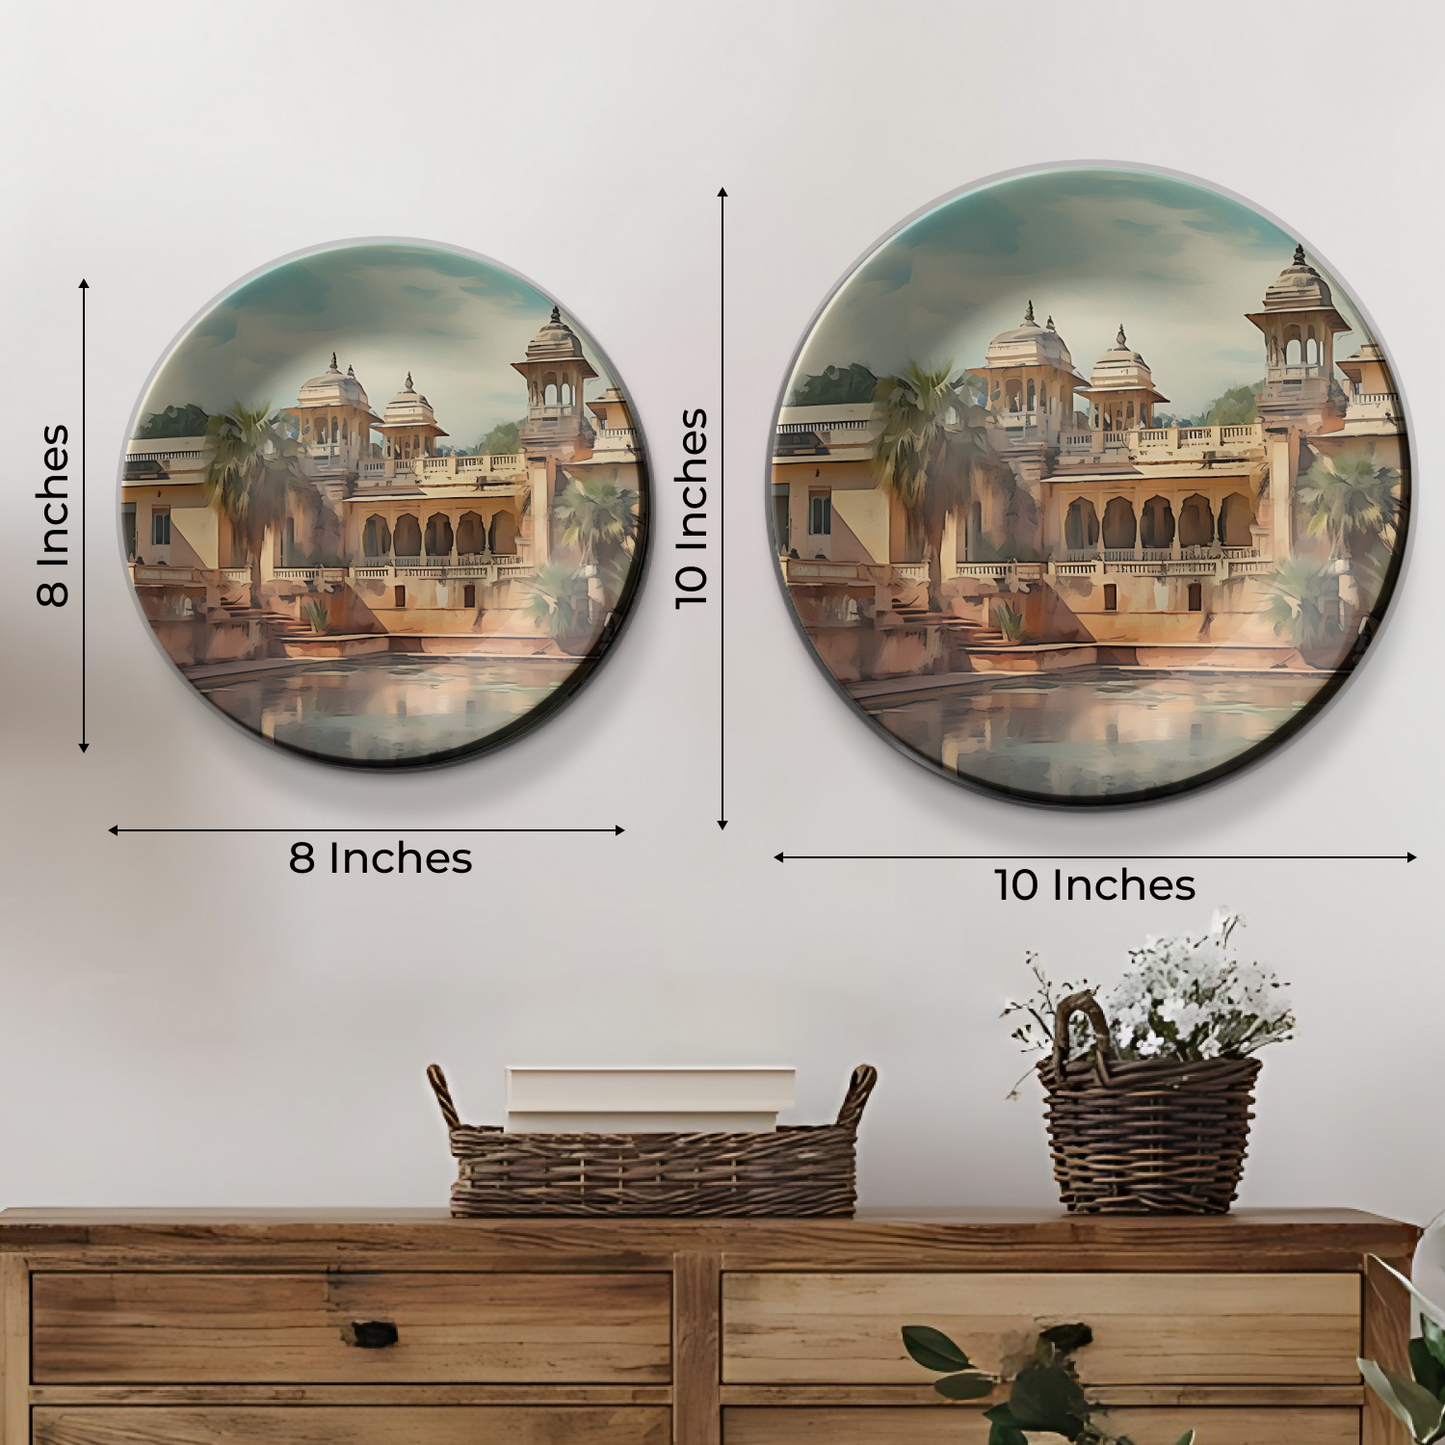 Vintage Maharaja's Palace Ceramic Wall Plate Home Décor